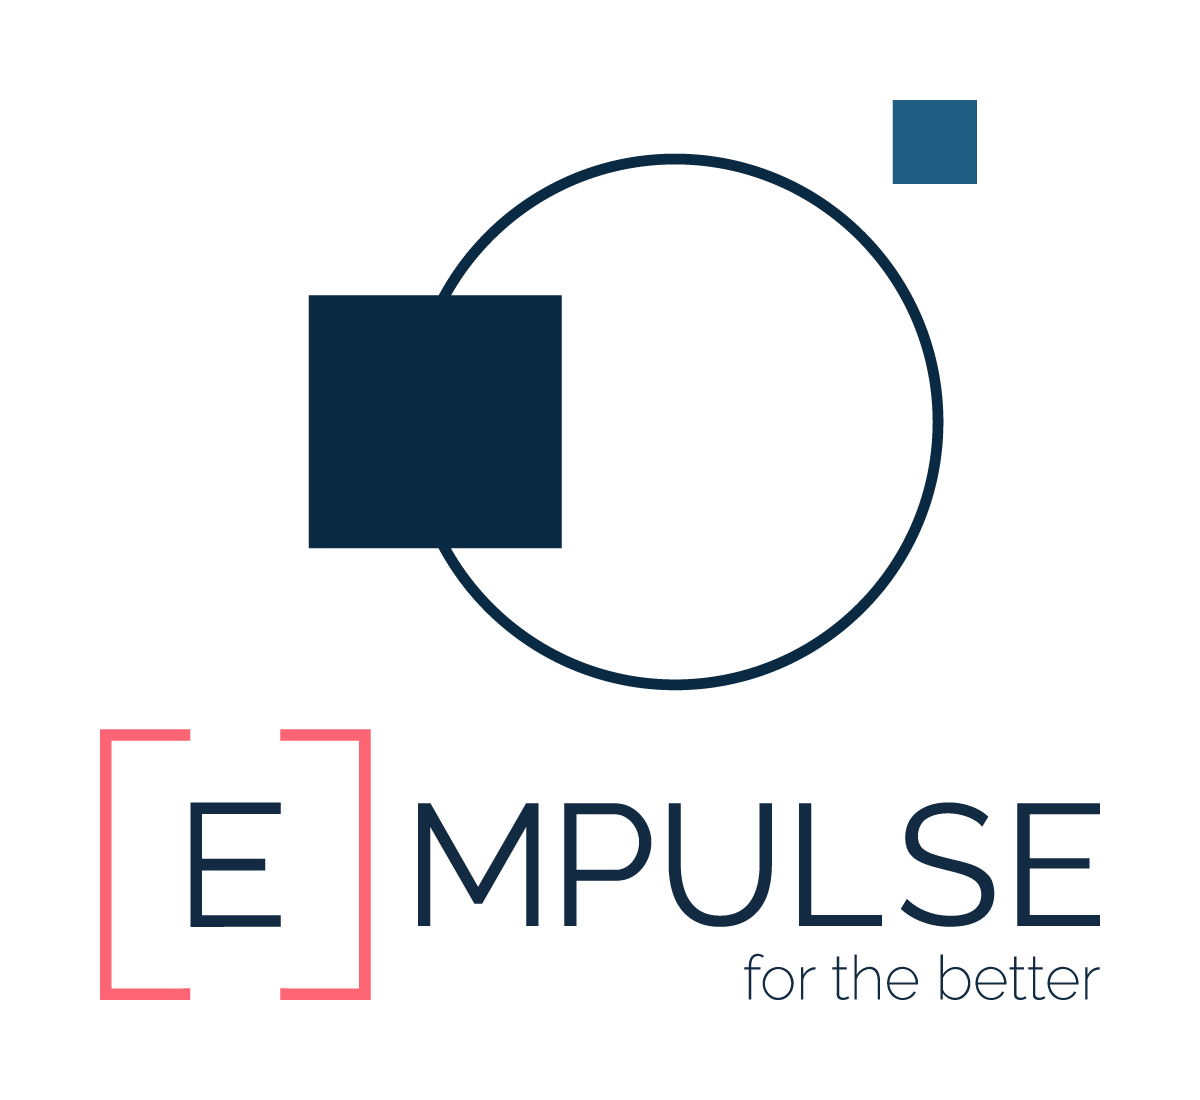 [E]mpulse - for the better